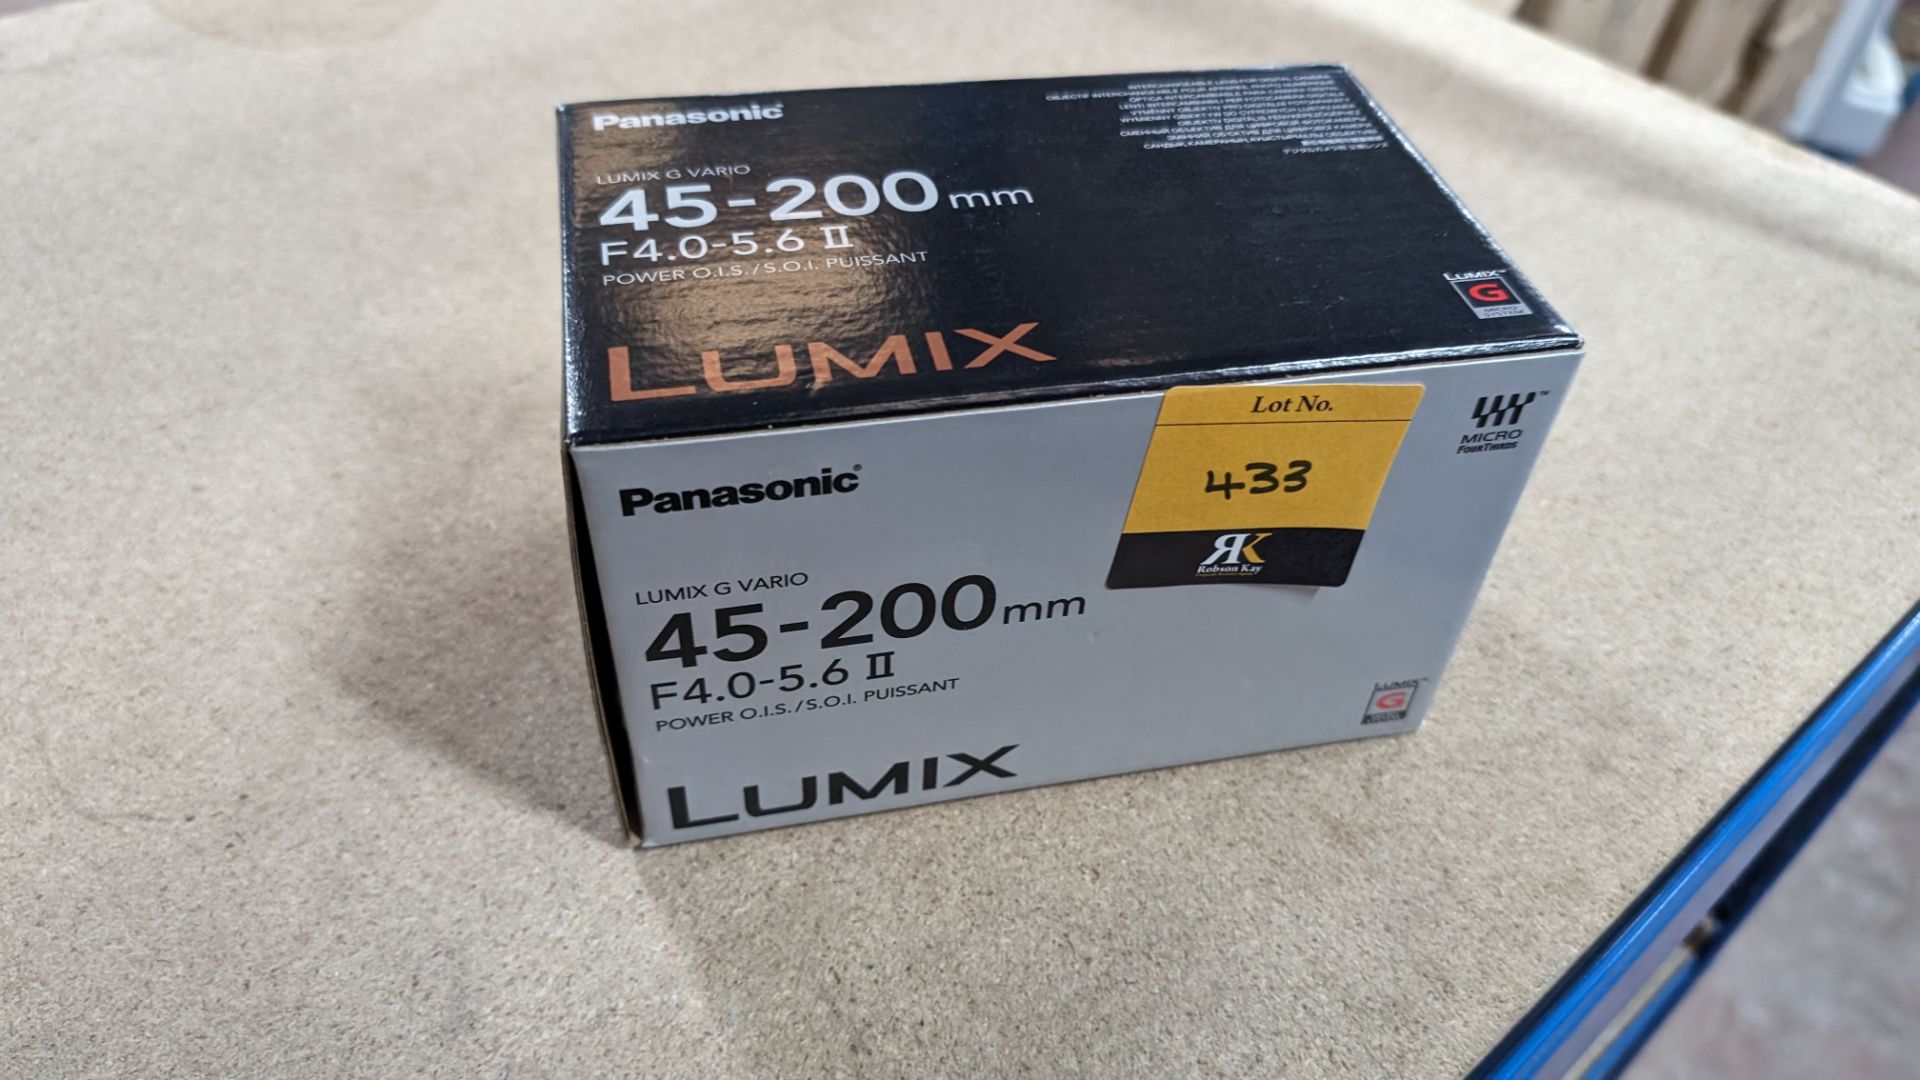 Panasonic Lumix G Vario 45-200mm lens, model H-FSA45200, f4.0-5.6 II - Bild 3 aus 6